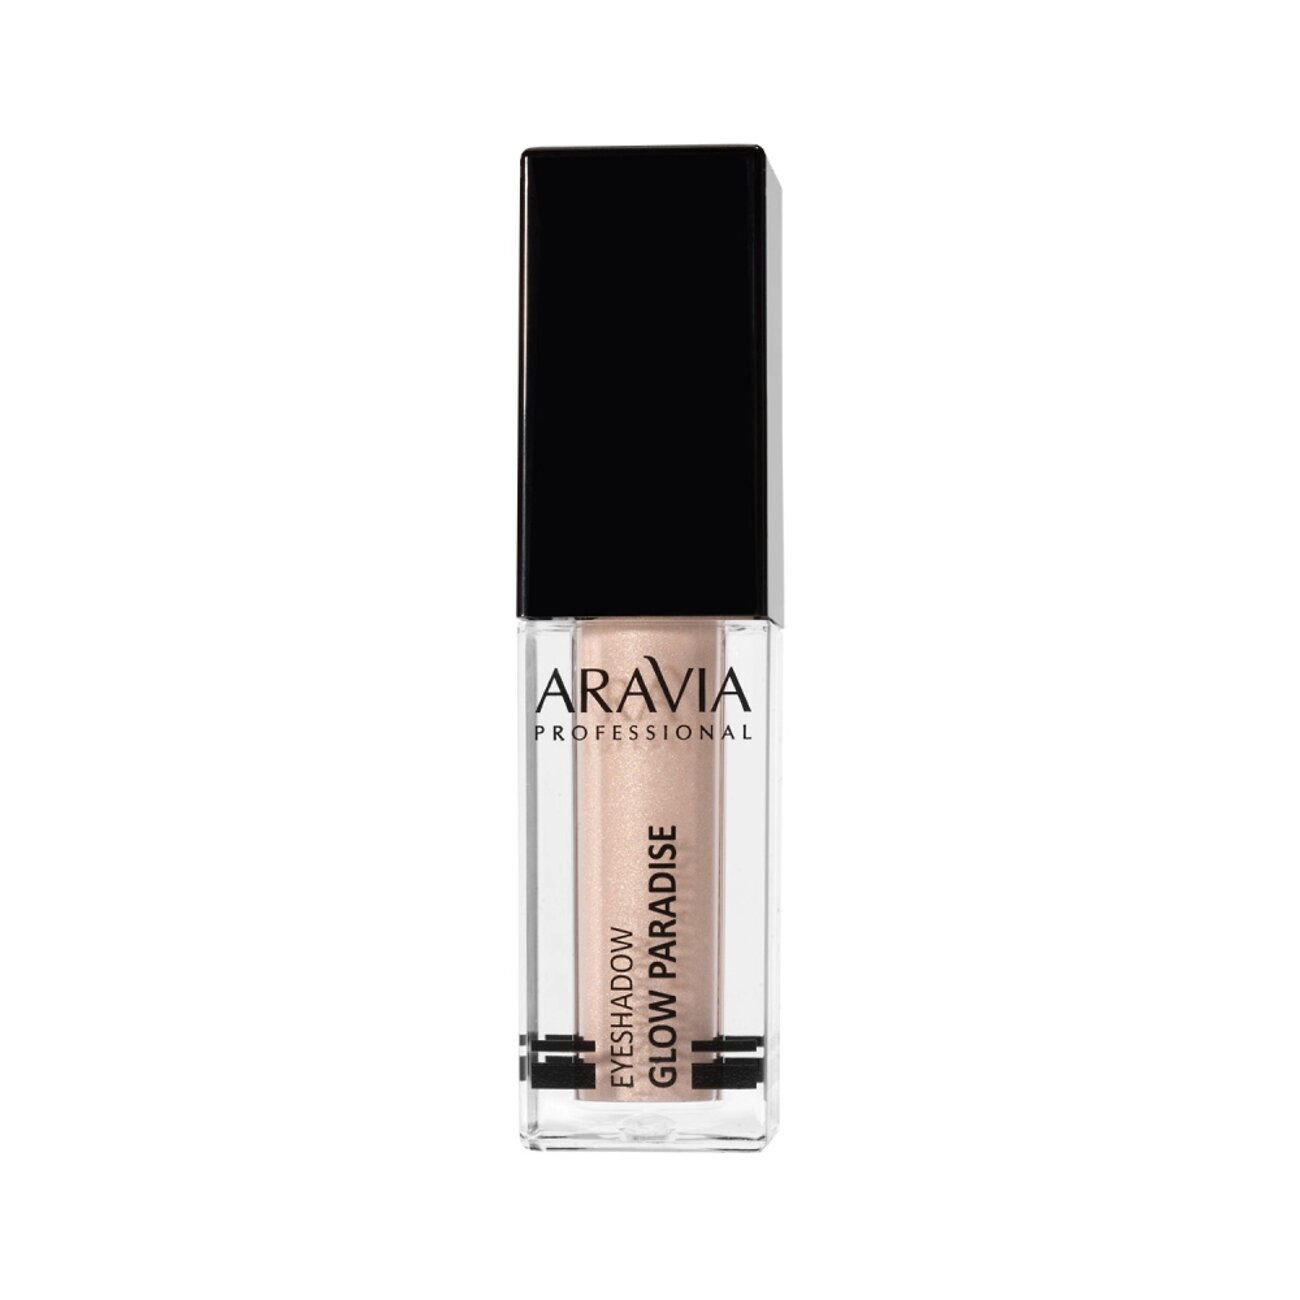 орг 15% ARAVIA Professional Aravia Professional Жидкие сияющие тени для век glow paradise, 5 мл – 01 pearl delight